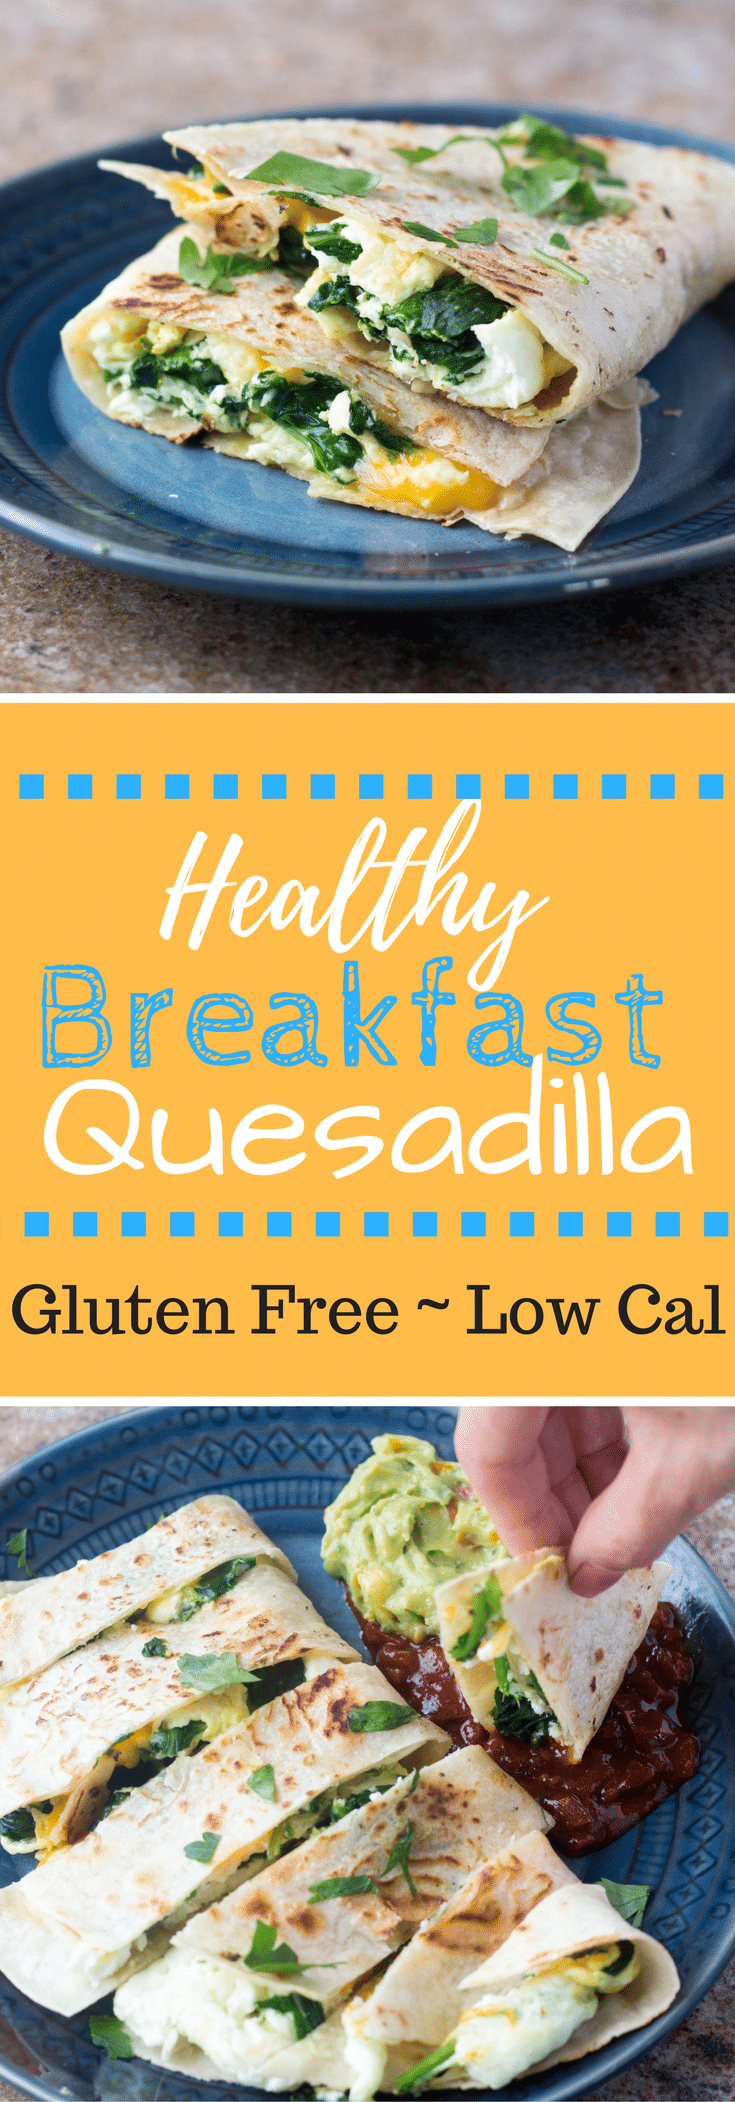 Healthy Breakfast Quesadilla - Gluten Free, Vegetarian